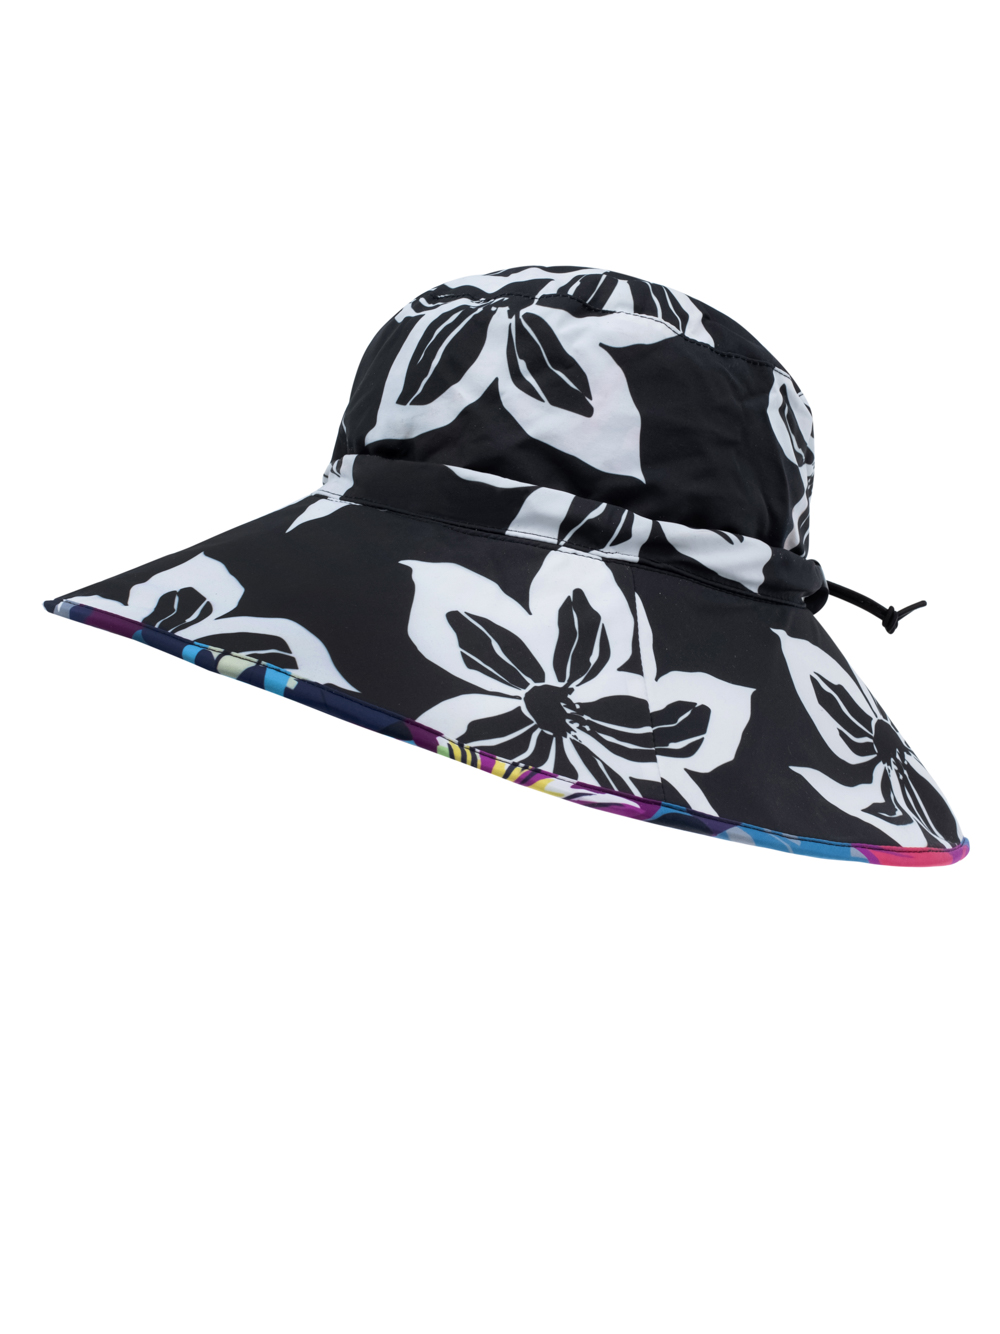 Encourage Thunderstorm niece כובע נשים רחב שוליים פרחים גיאומטריים שחור לבן -צבעוני.כובעי SunWay